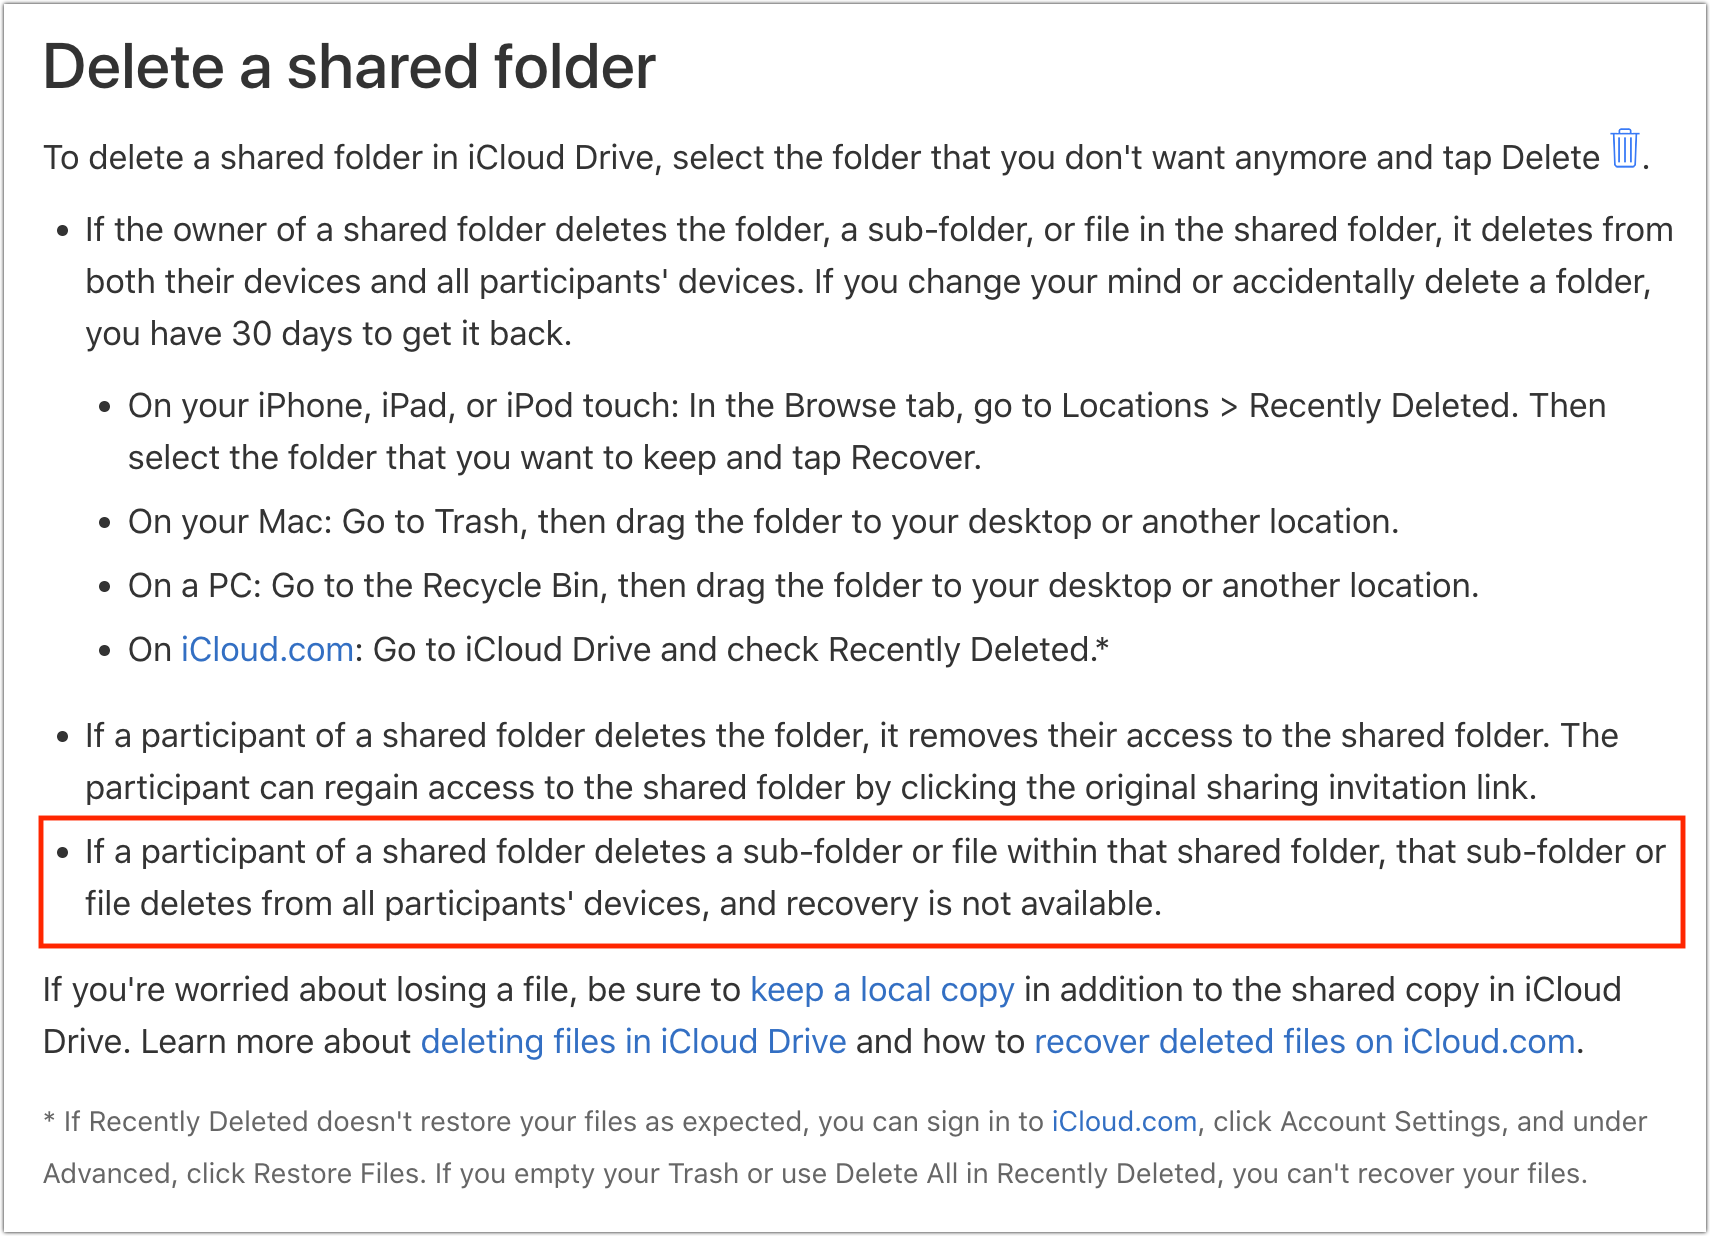 Bad Apple 5: iCloud Drive Folder Sharing Risks Data Loss